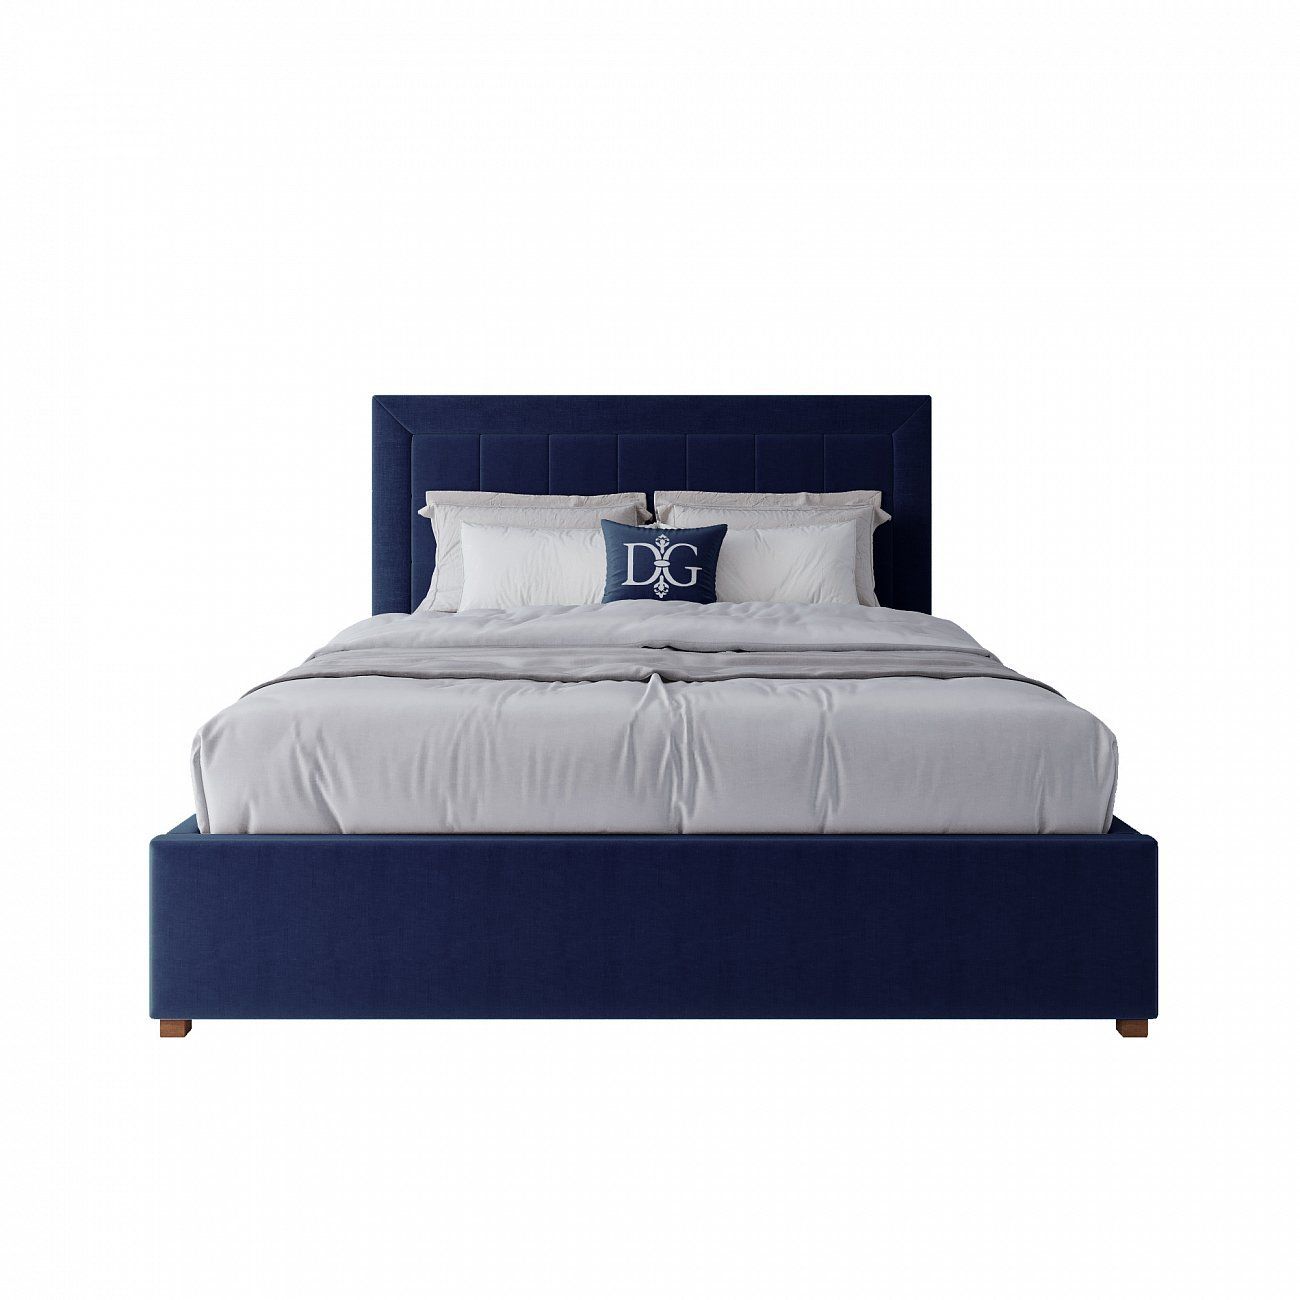 Double bed 160x200 blue Elizabeth